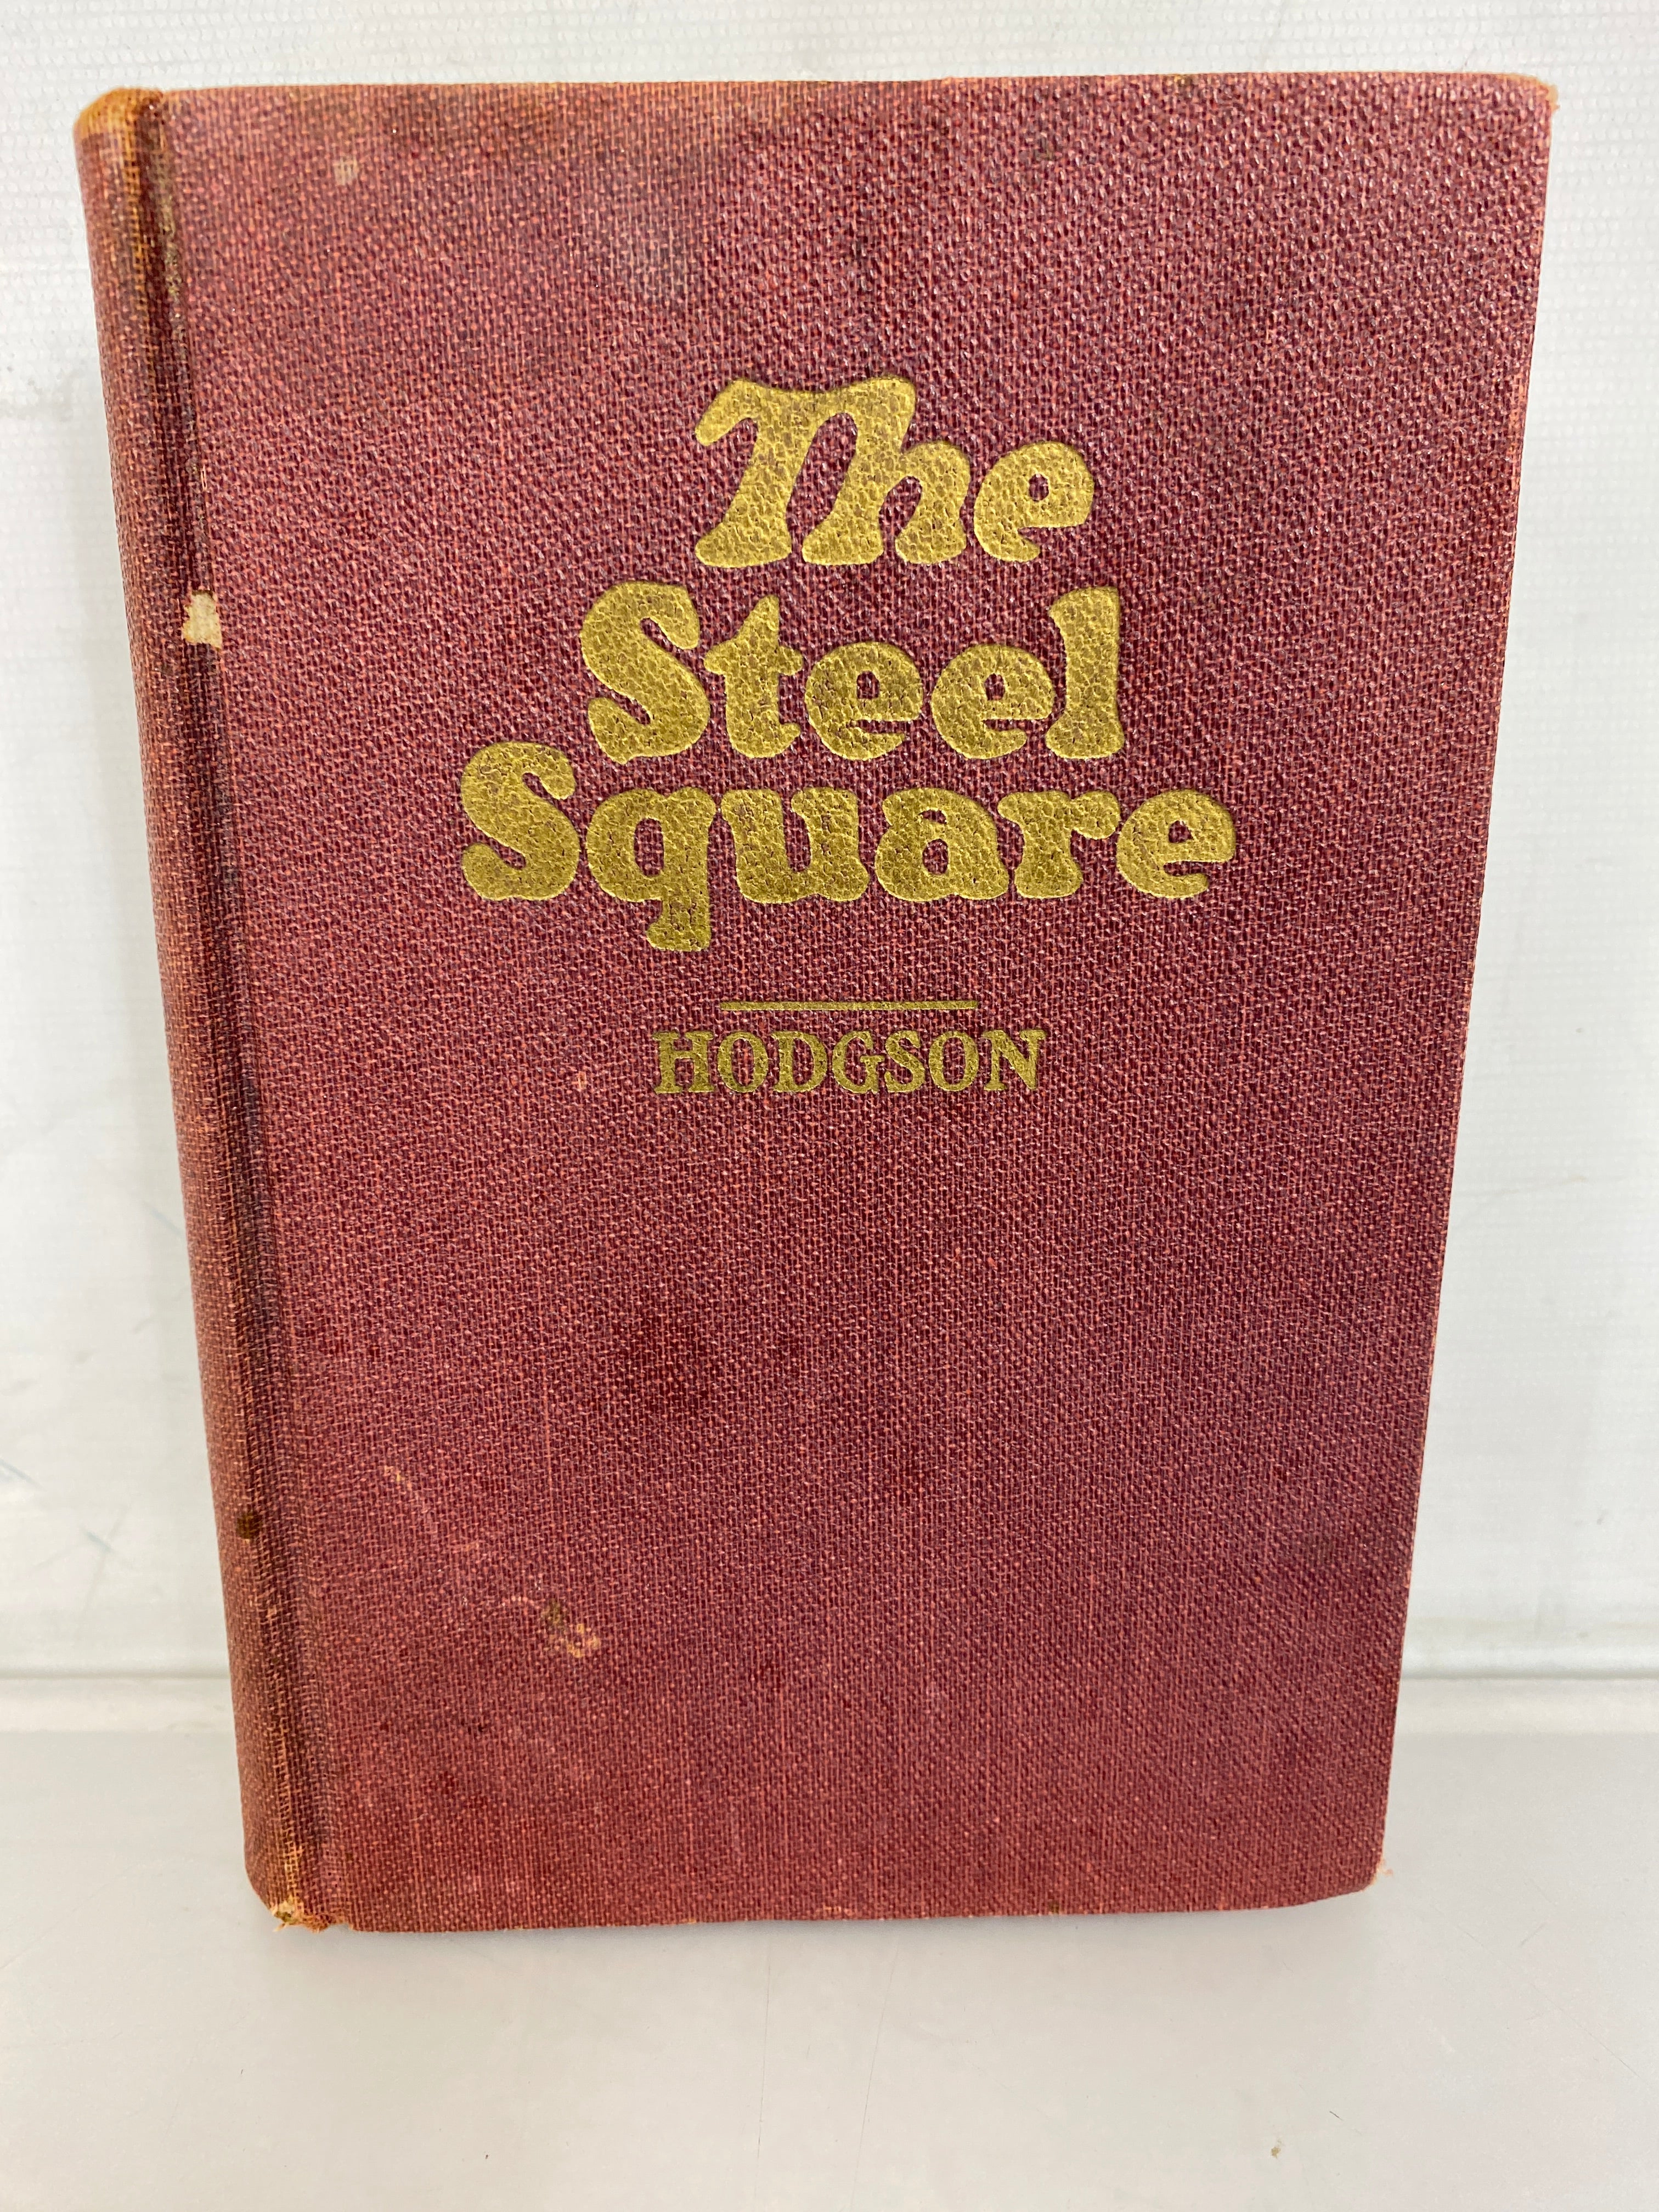 The Steel Square by Fred T. Hodgson c1940s HC Vintage Carpenter's Squares HC